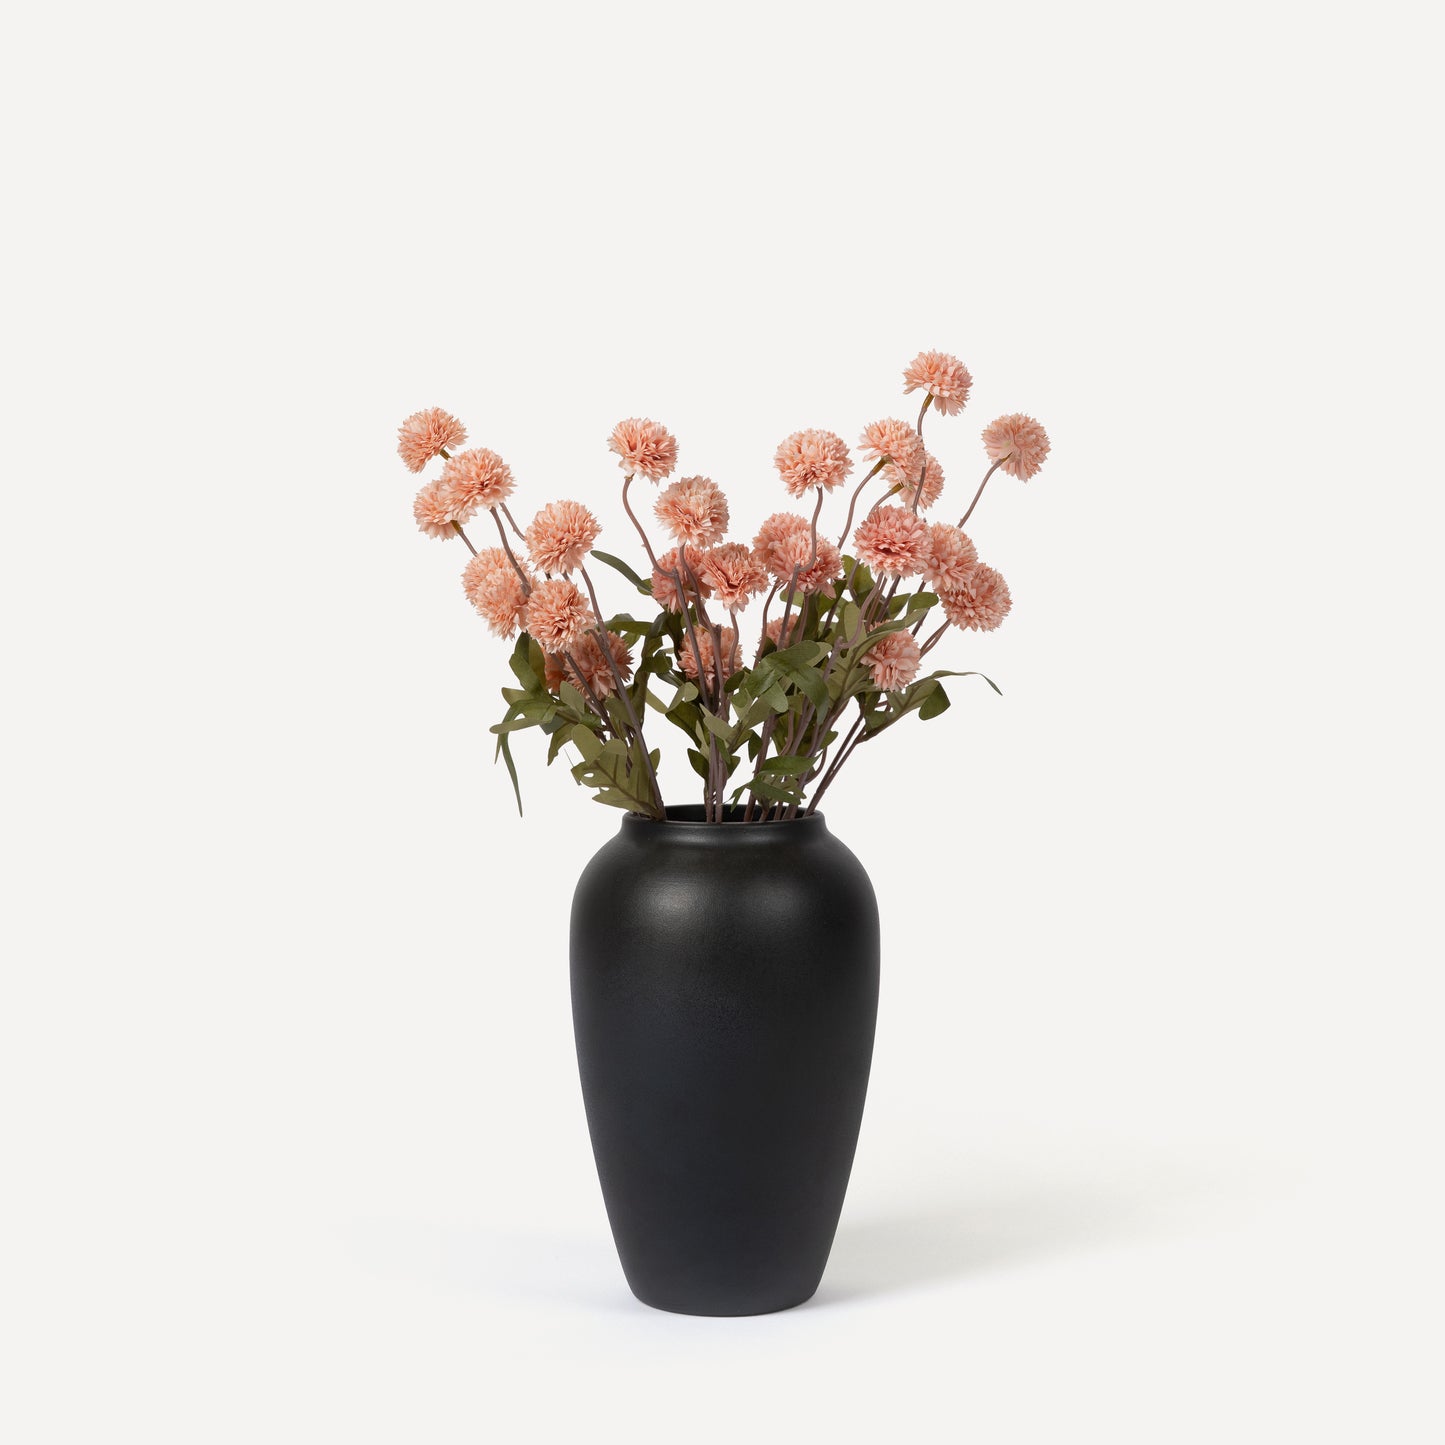 Globe Chrysanthemum - White, Blush, Rouge